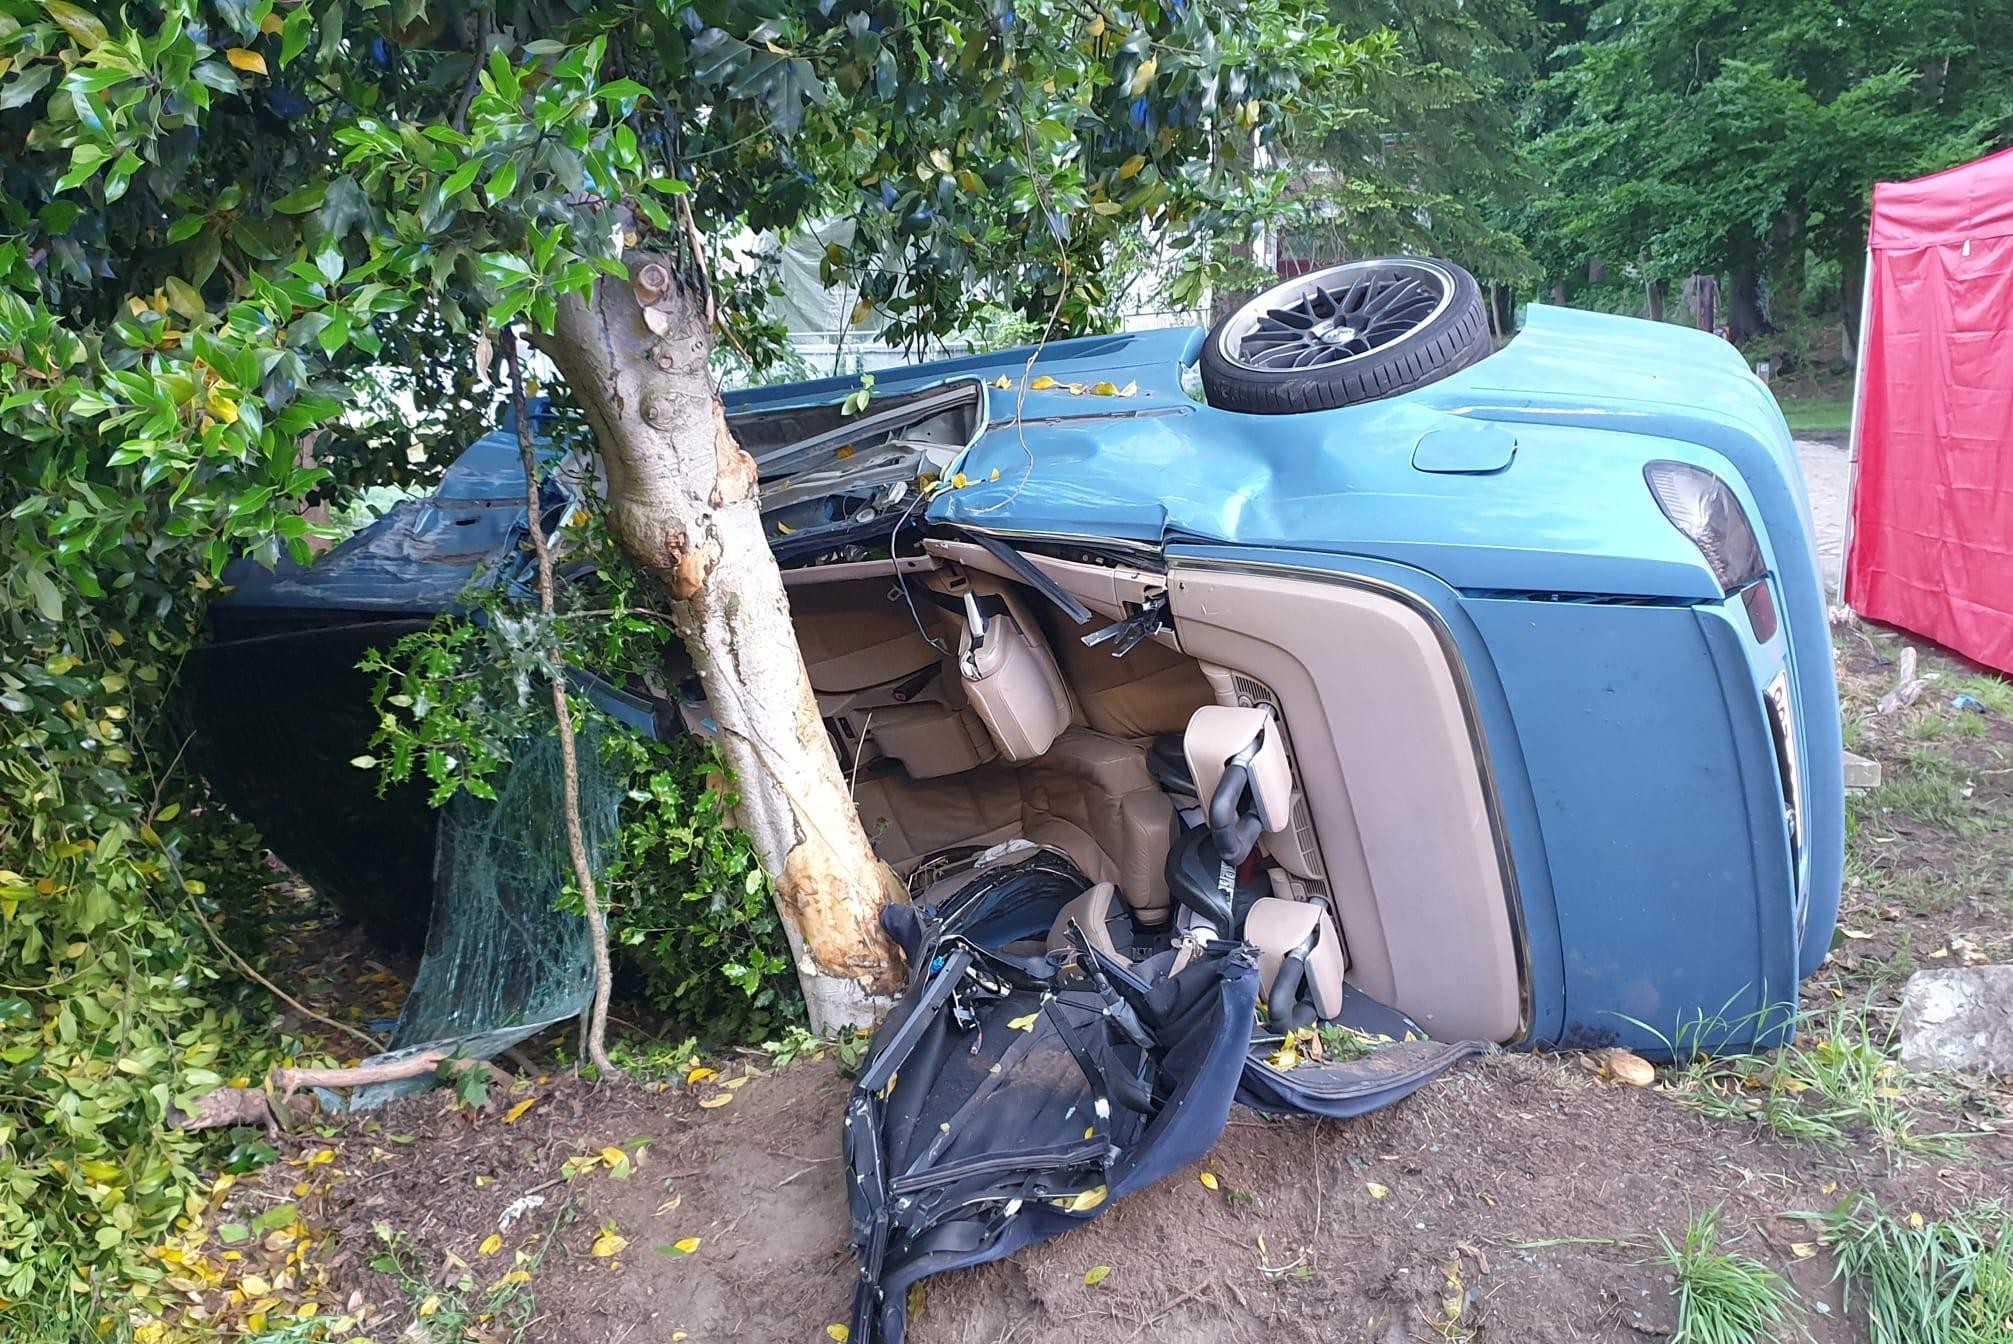 Cabriolet går av stabelen i Westmeerbeek: 33 år gammel sjåfør overlever ikke treffet (Hulshout)